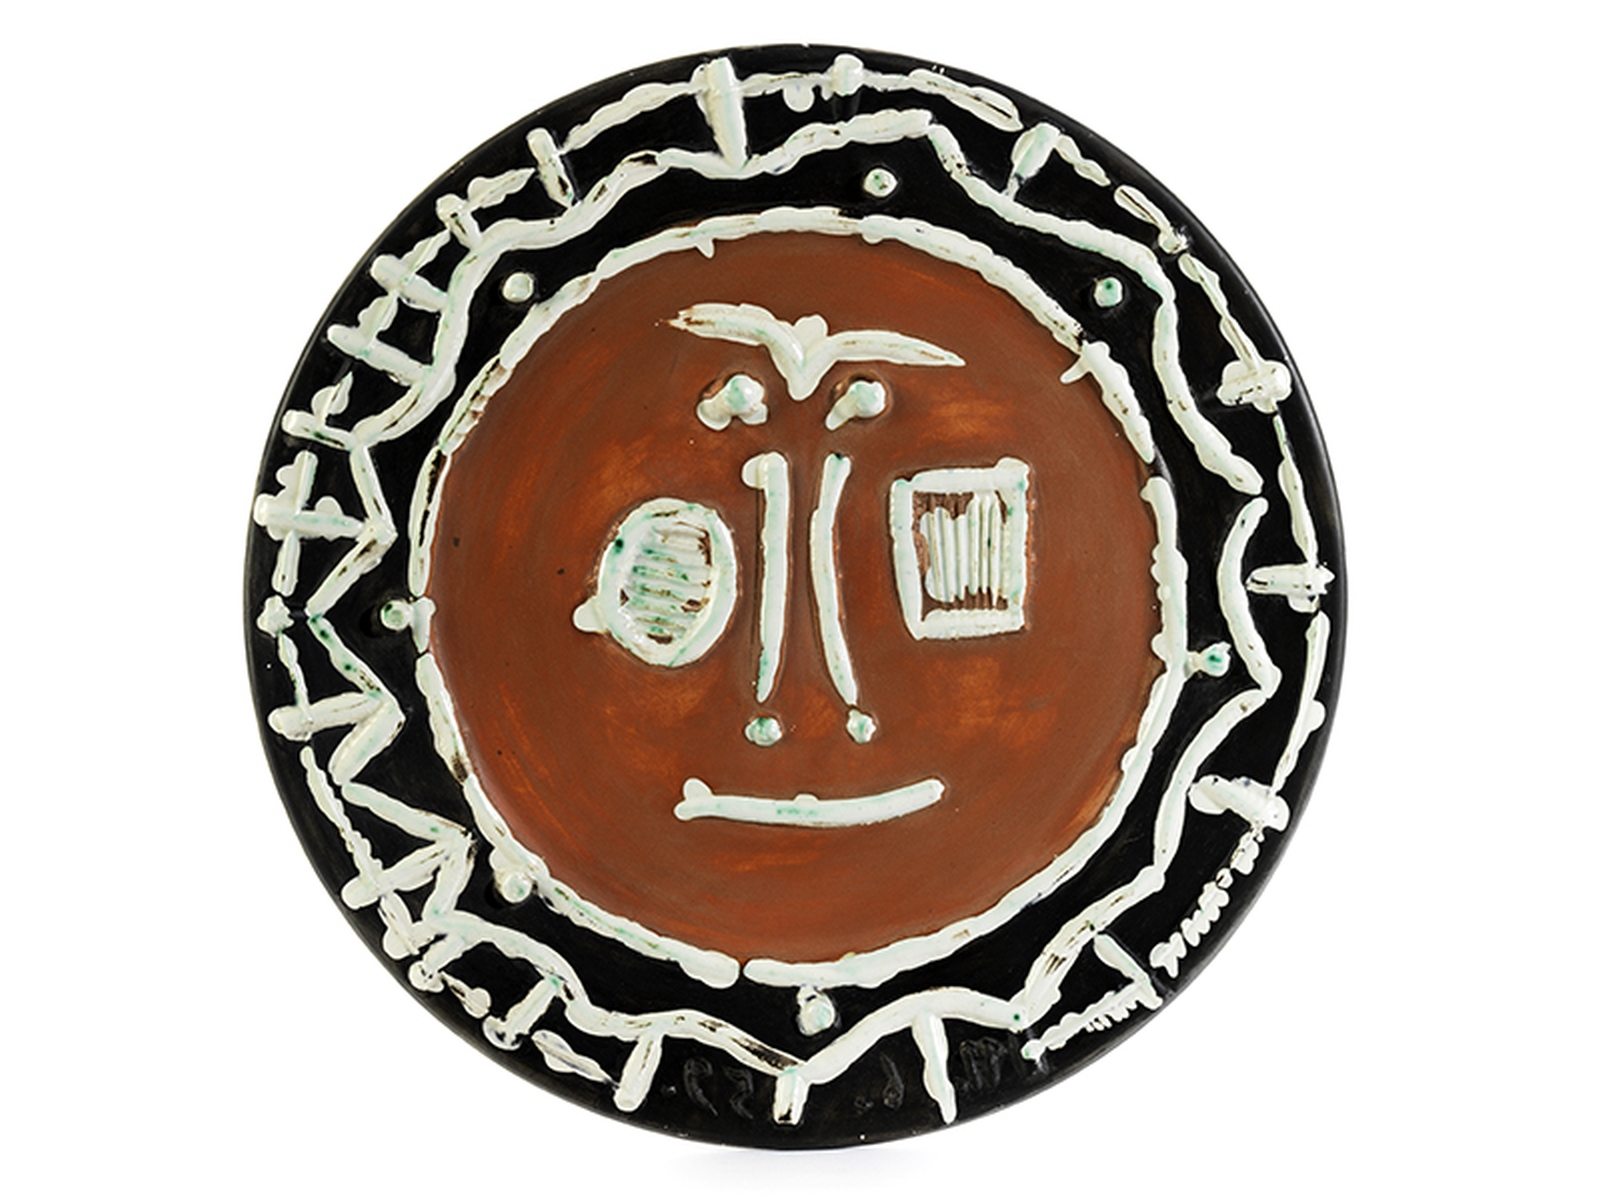 Pablo Picasso, 1881 Málaga "" 1973 Mougins KERAMIKPLATTE MIT ABSTRAHIERTEM GESICHT Keramik. - Image 5 of 5